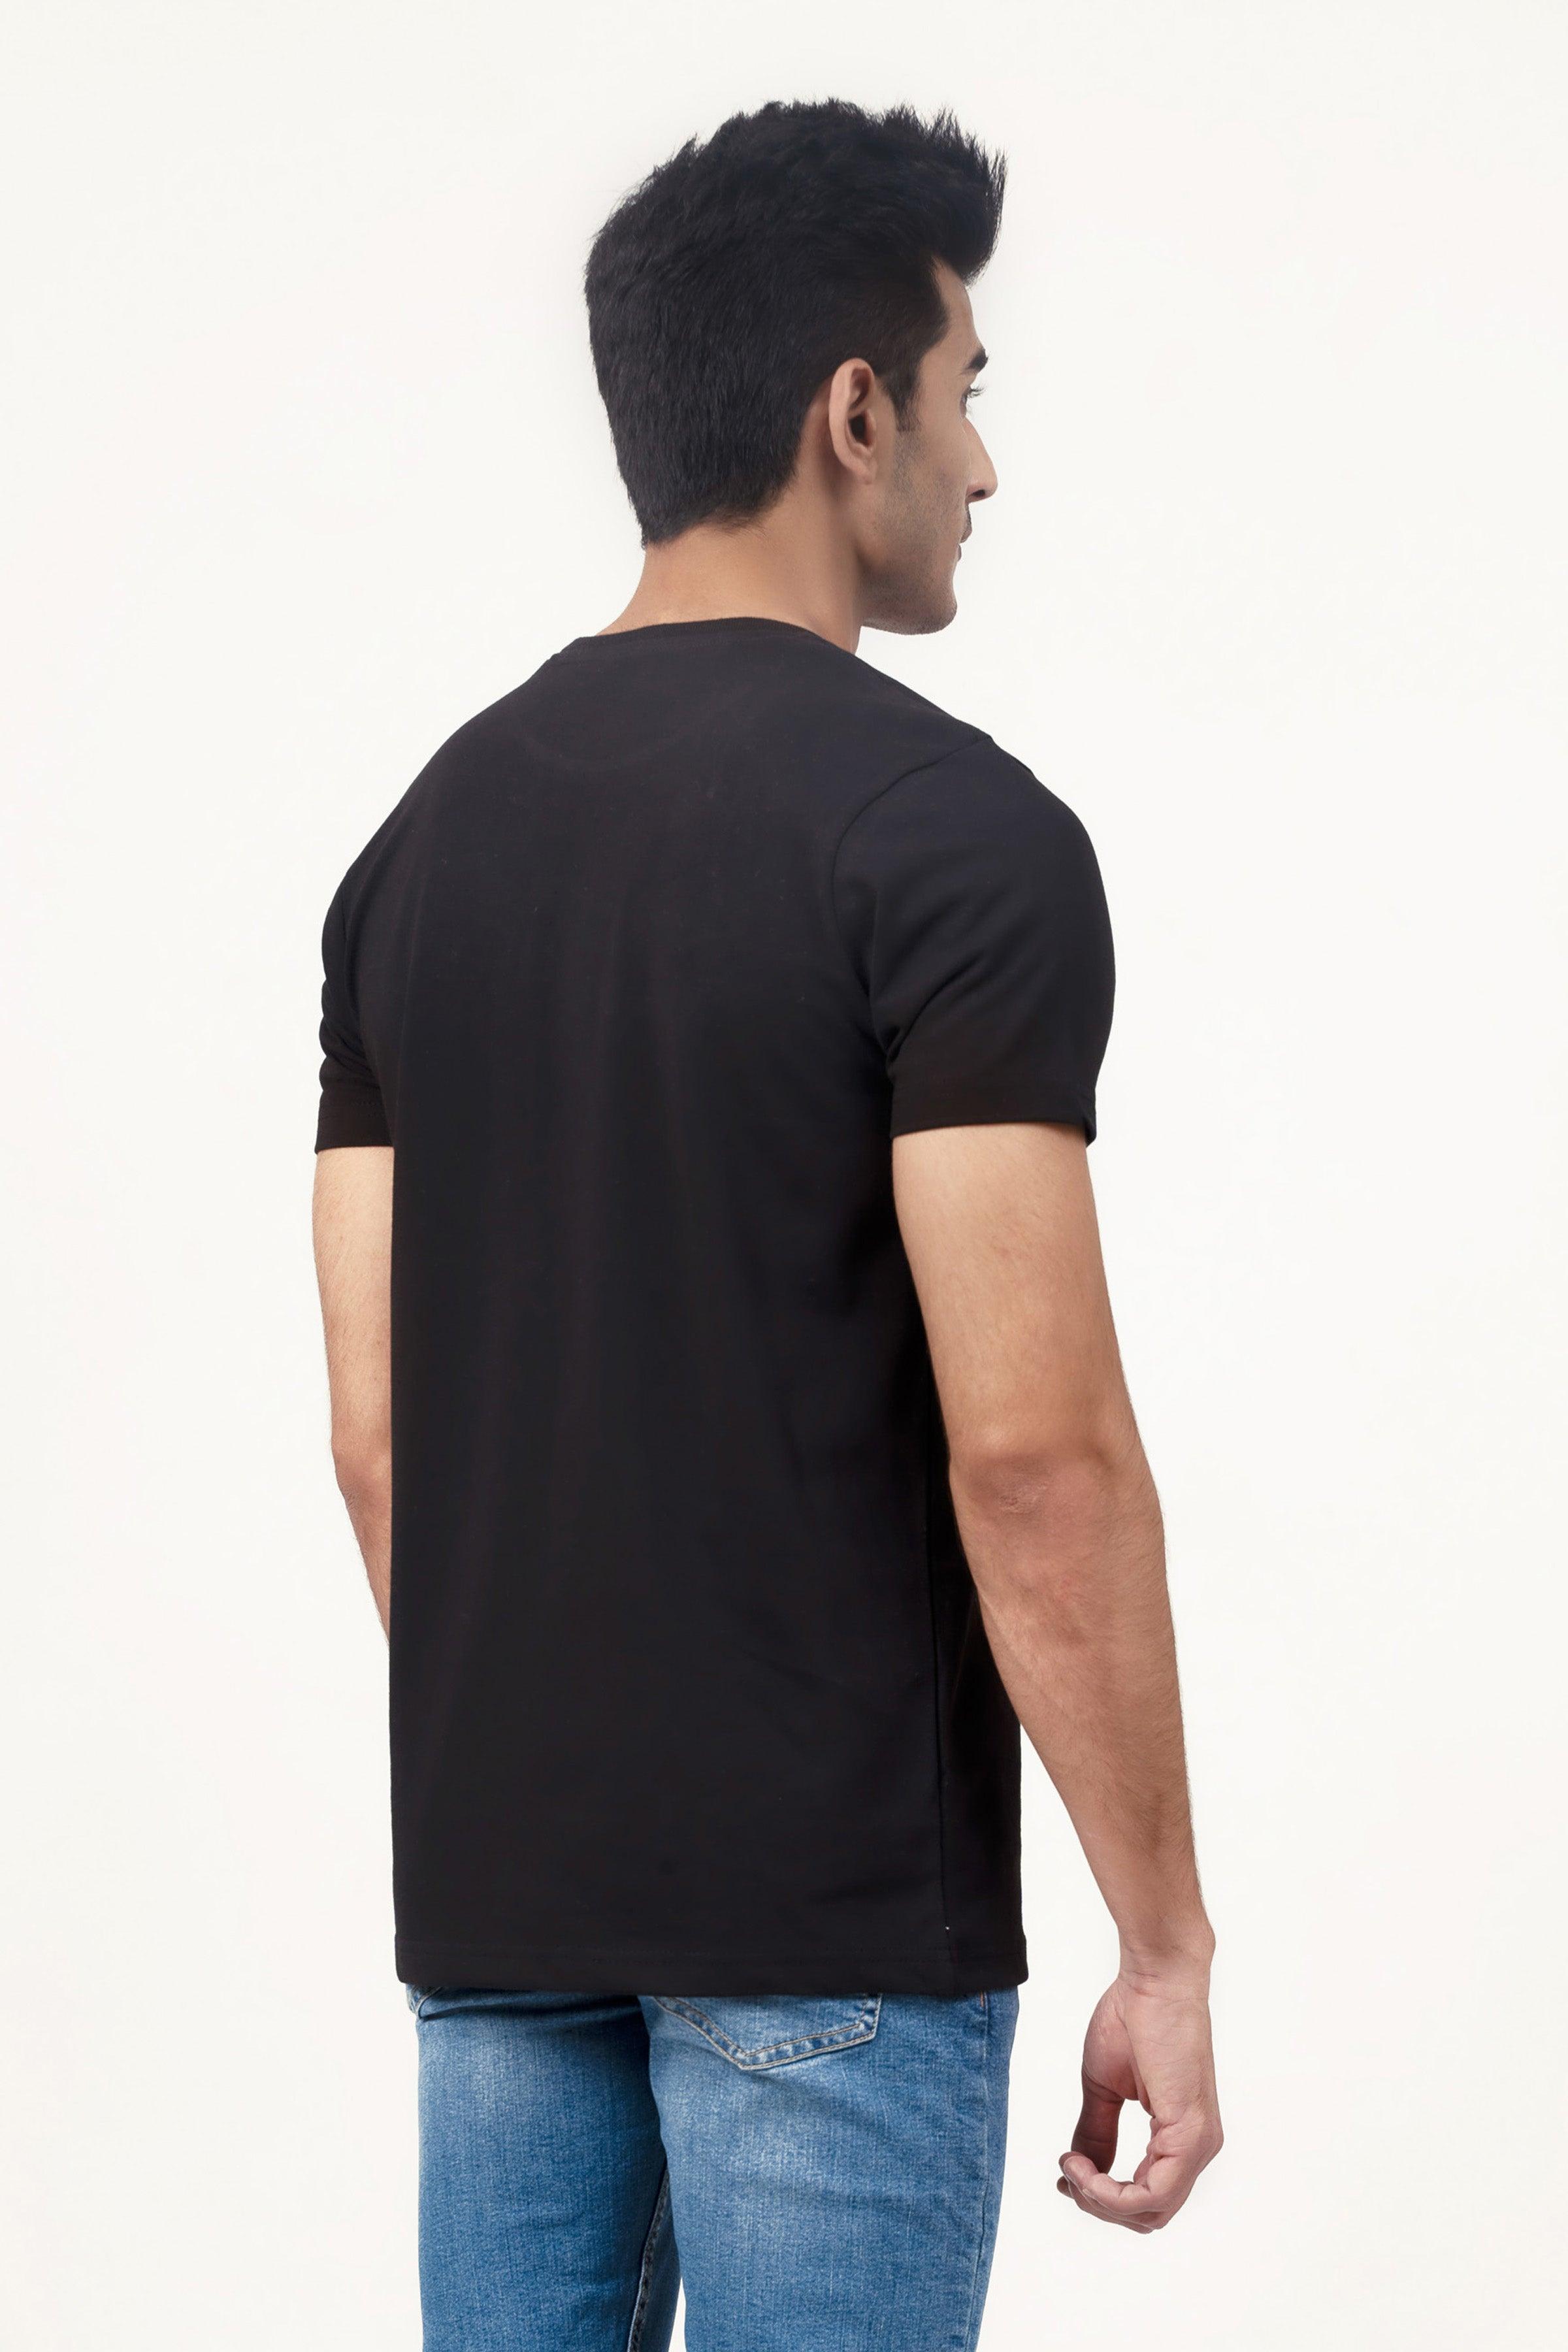 GRAPHIC T-SHIRT BLACK at Charcoal Clothing